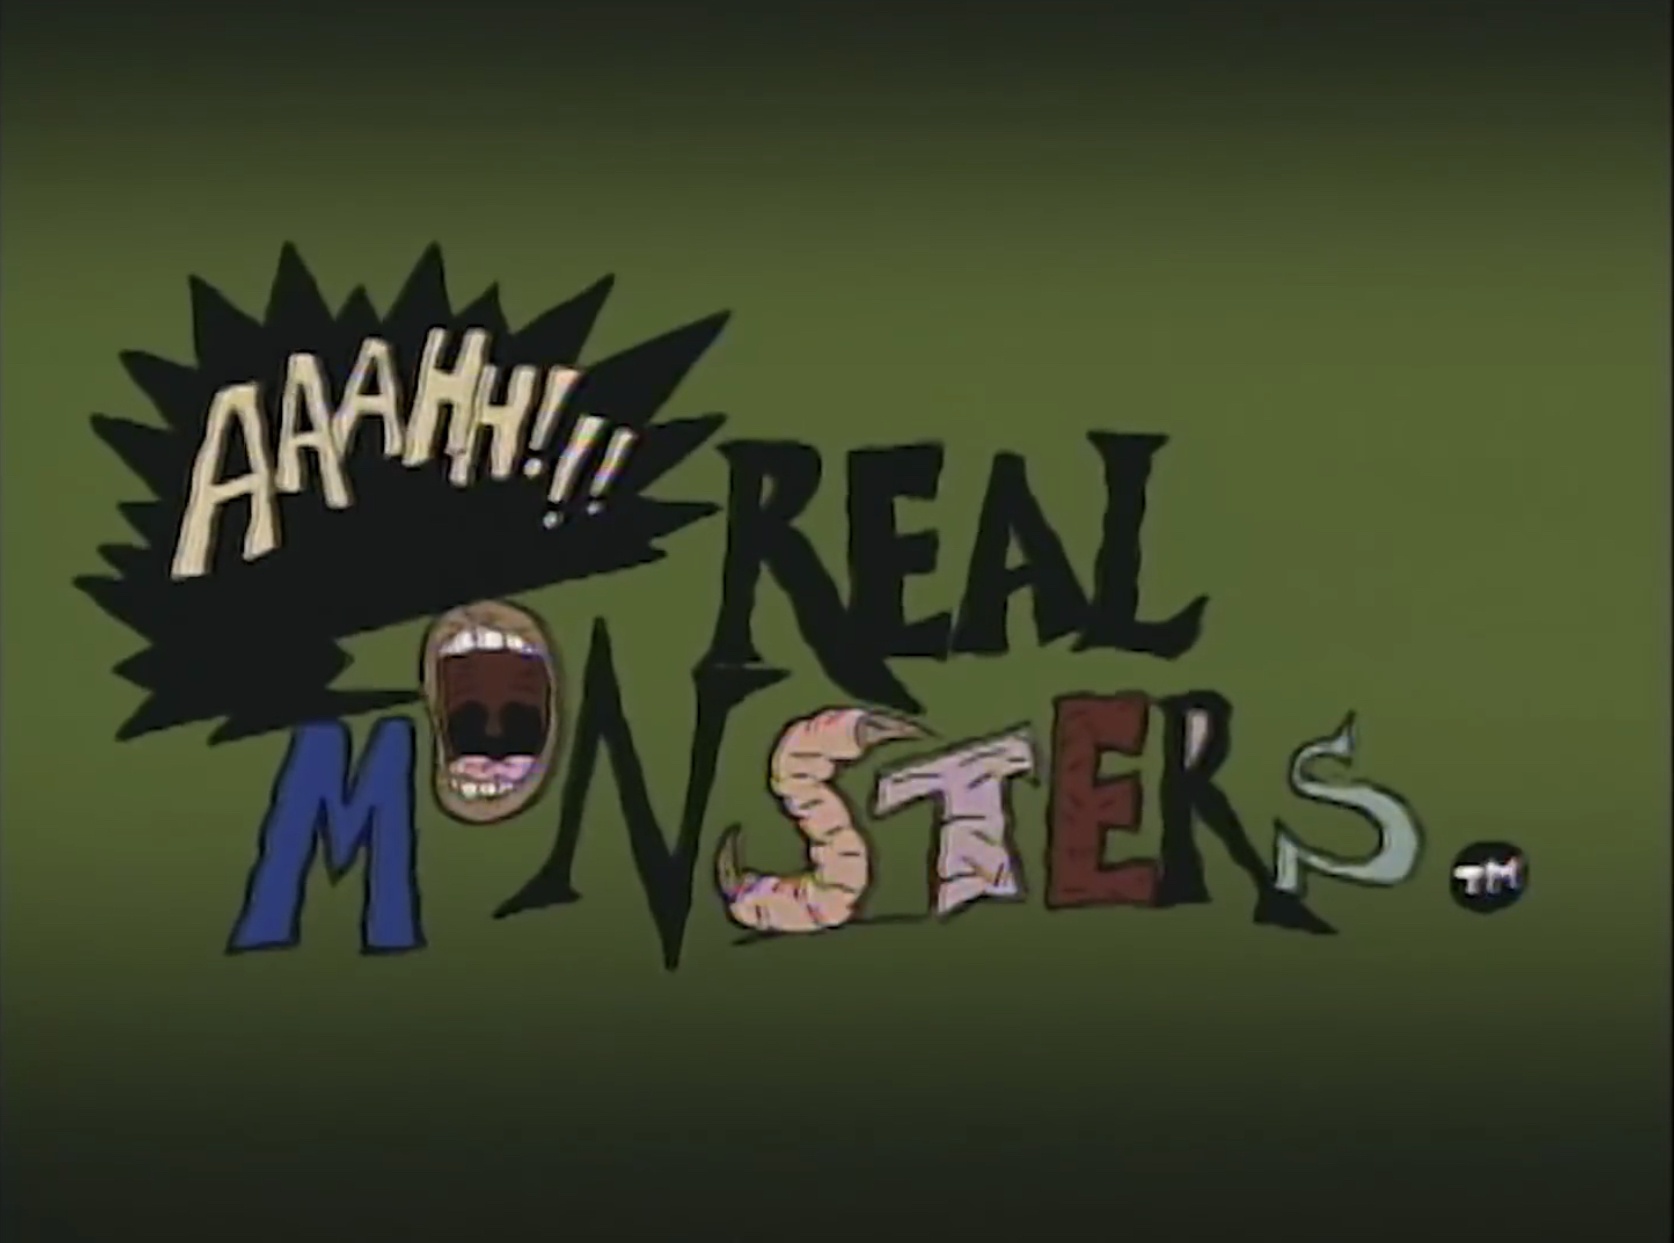 Aaahh real monsters logo.jpeg